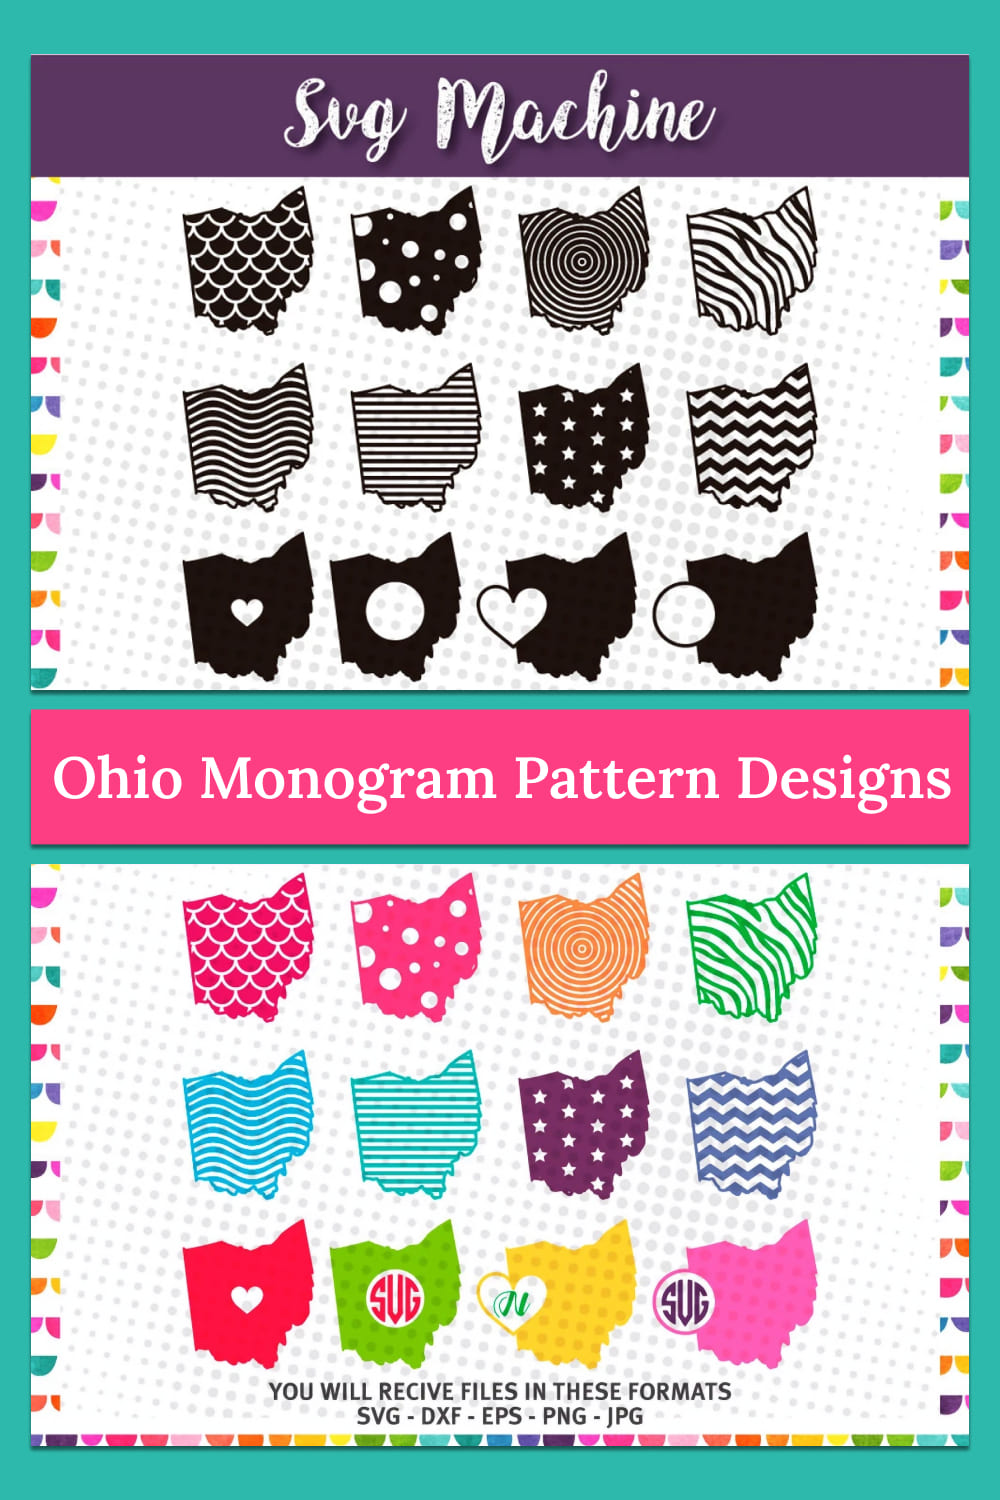 Ohio monogram pattern designs, Ohio State SVG.